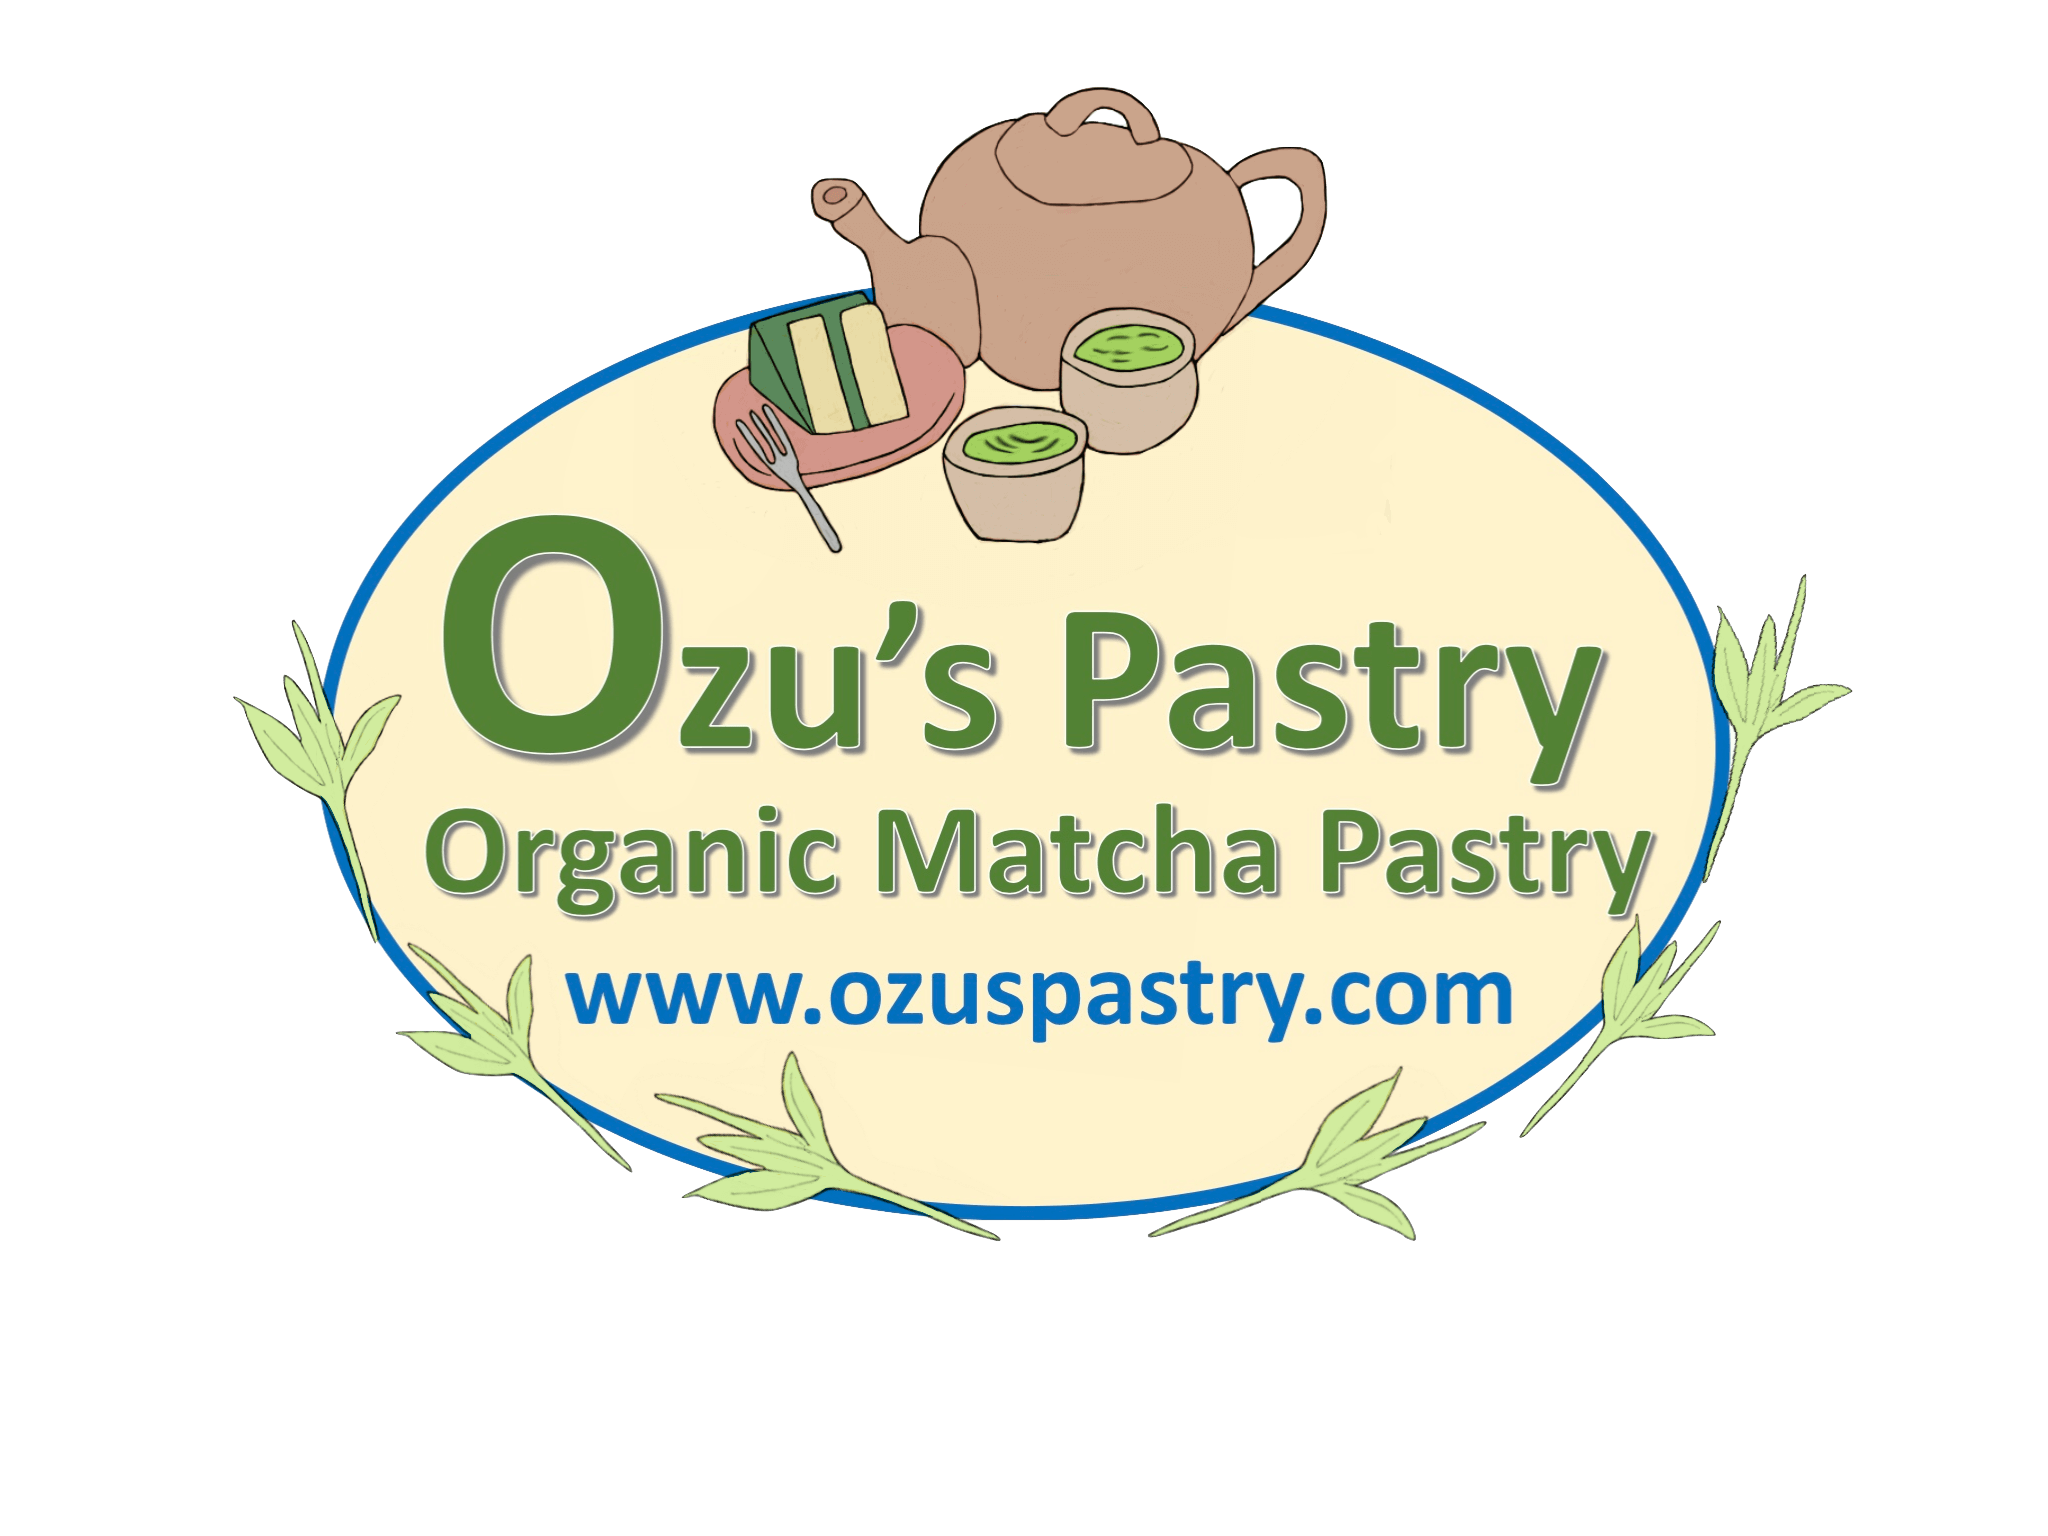 Ozu's pastryサイトへのリンク画像です